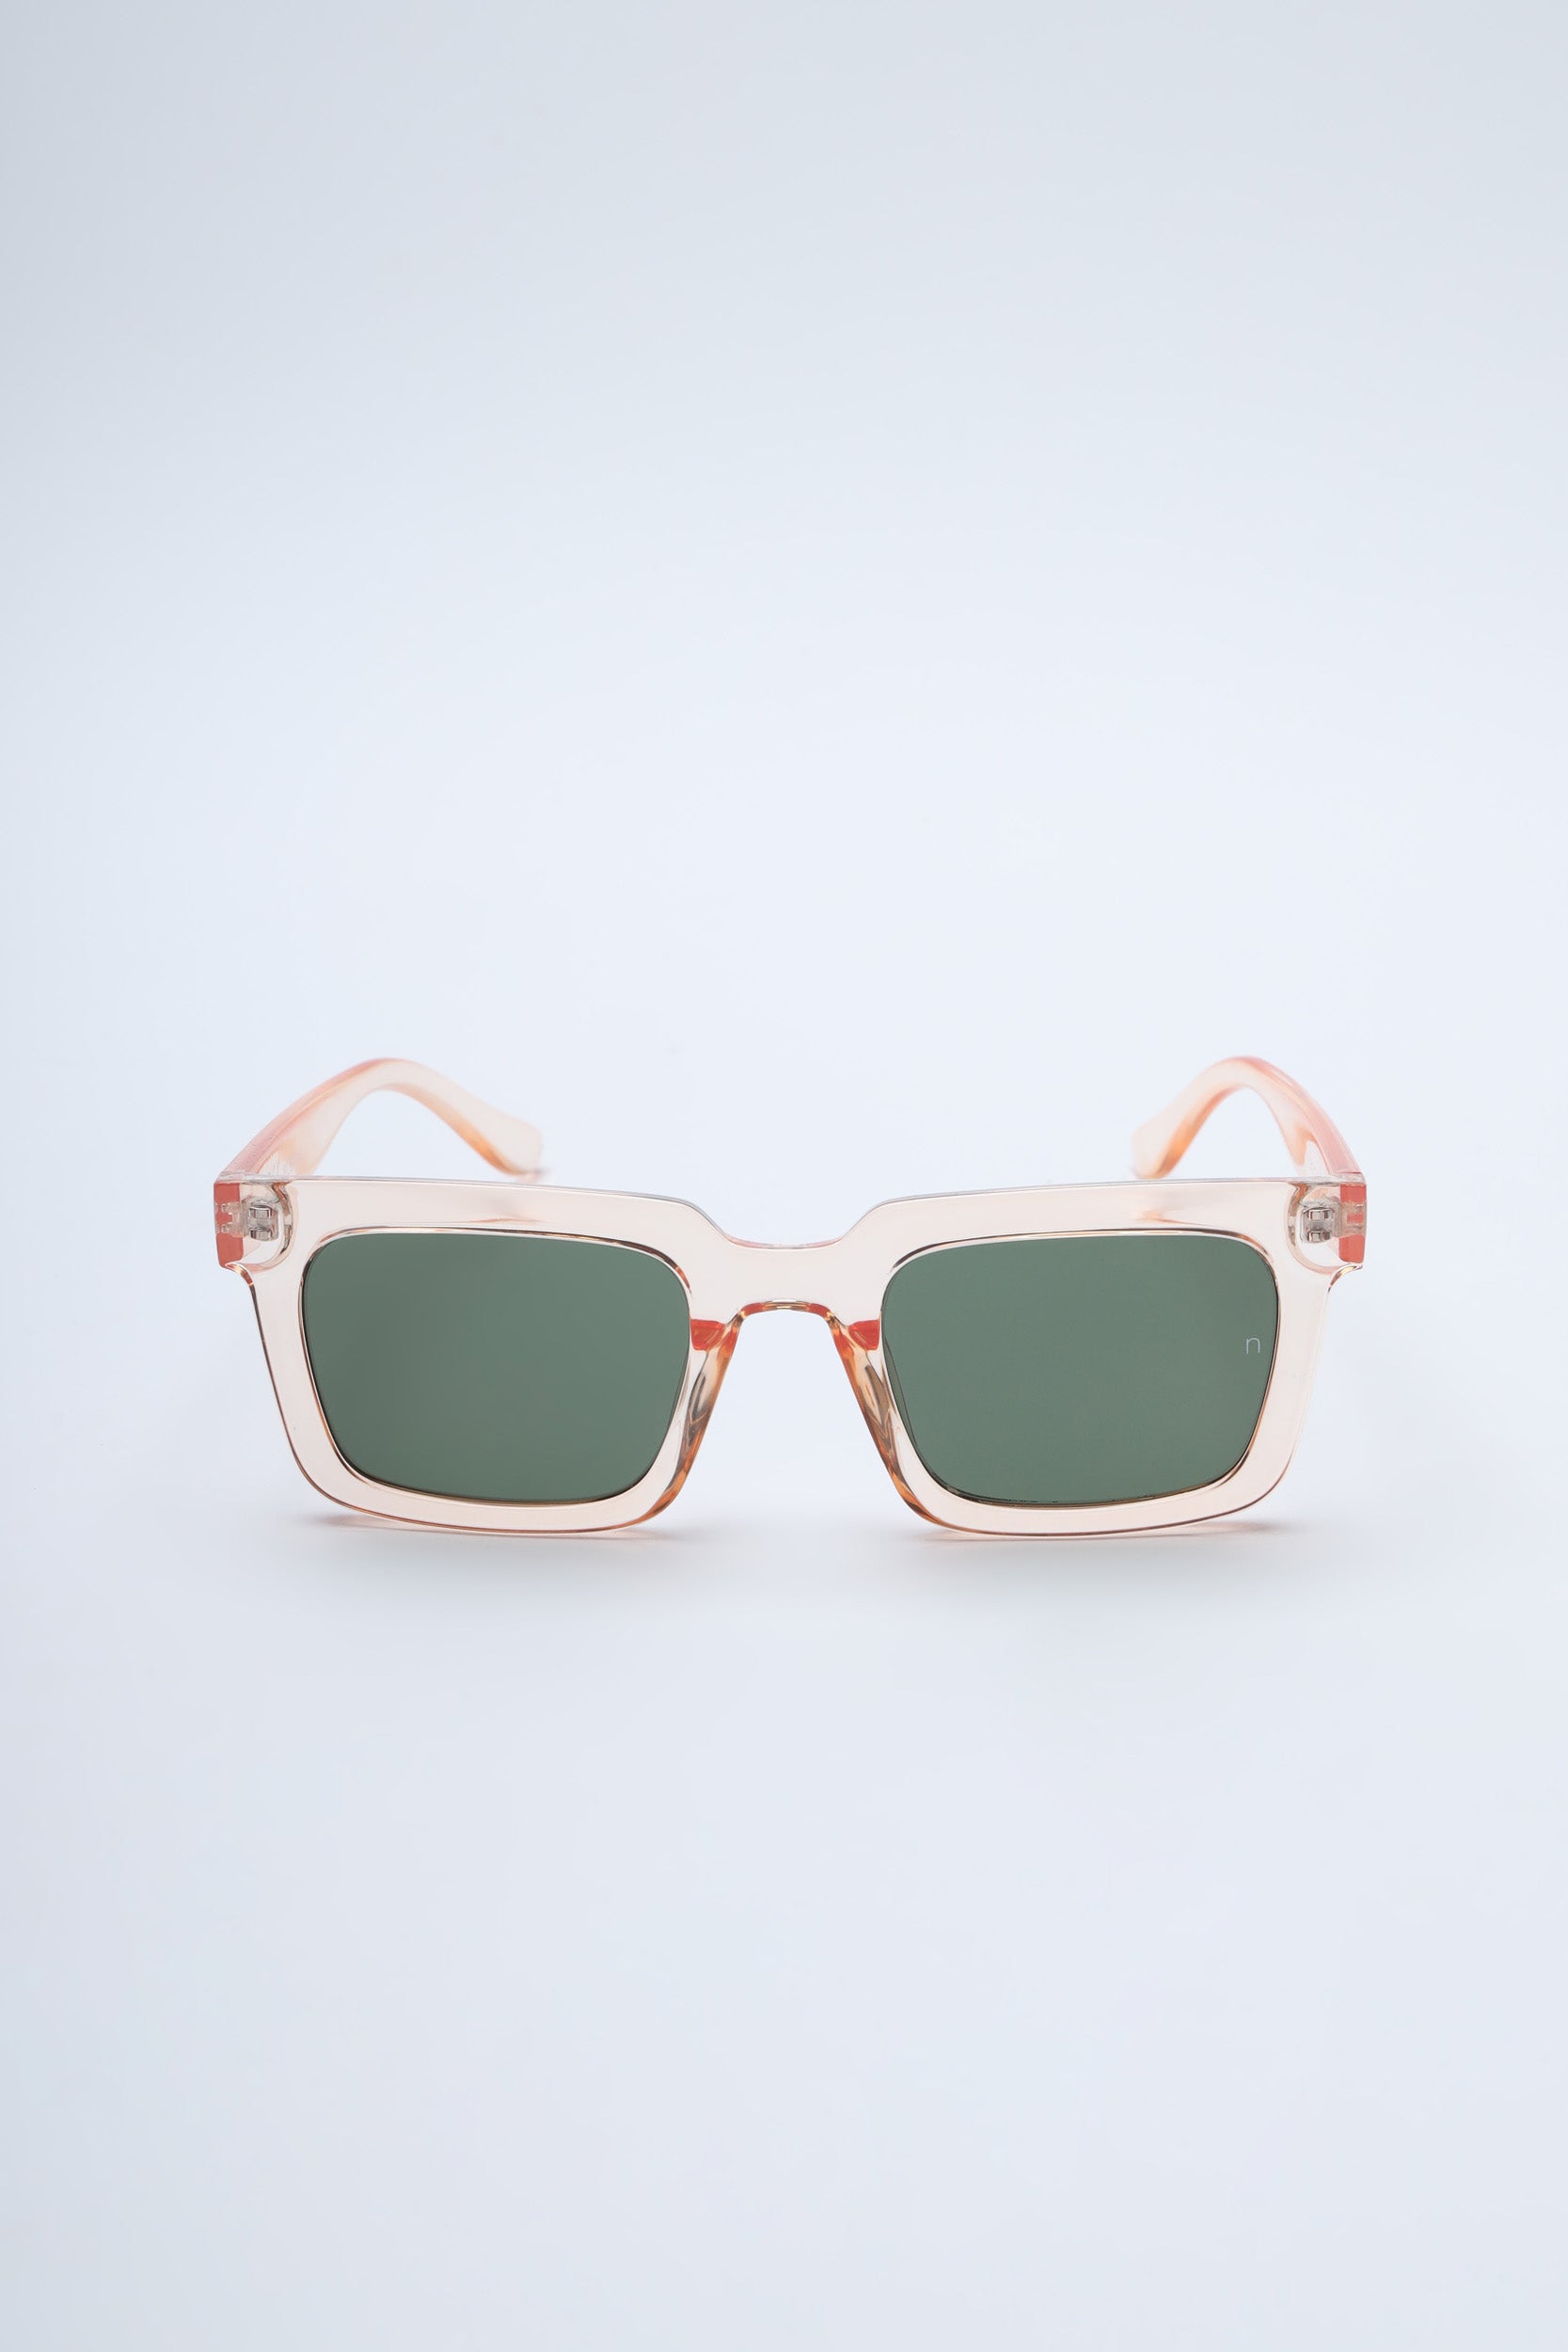 NS1009YFTGL PC Orange Frame with Green Glass Lens Sunglasses – Noggah  Sunglasses